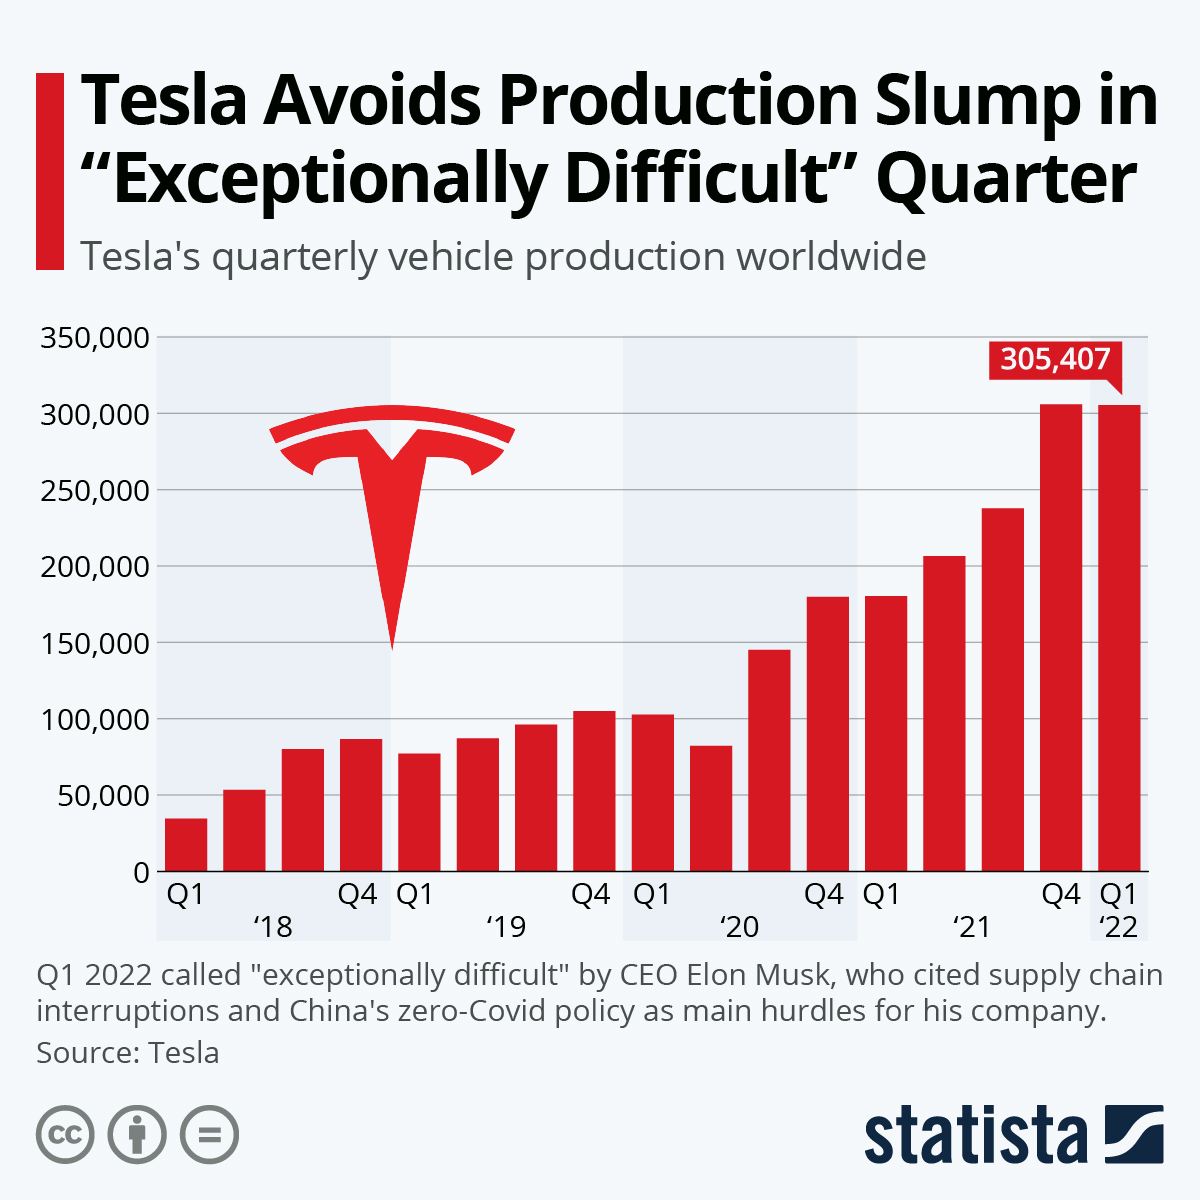 Tesla Avoids Production Slump in "Exceptionally Difficult" Quarter